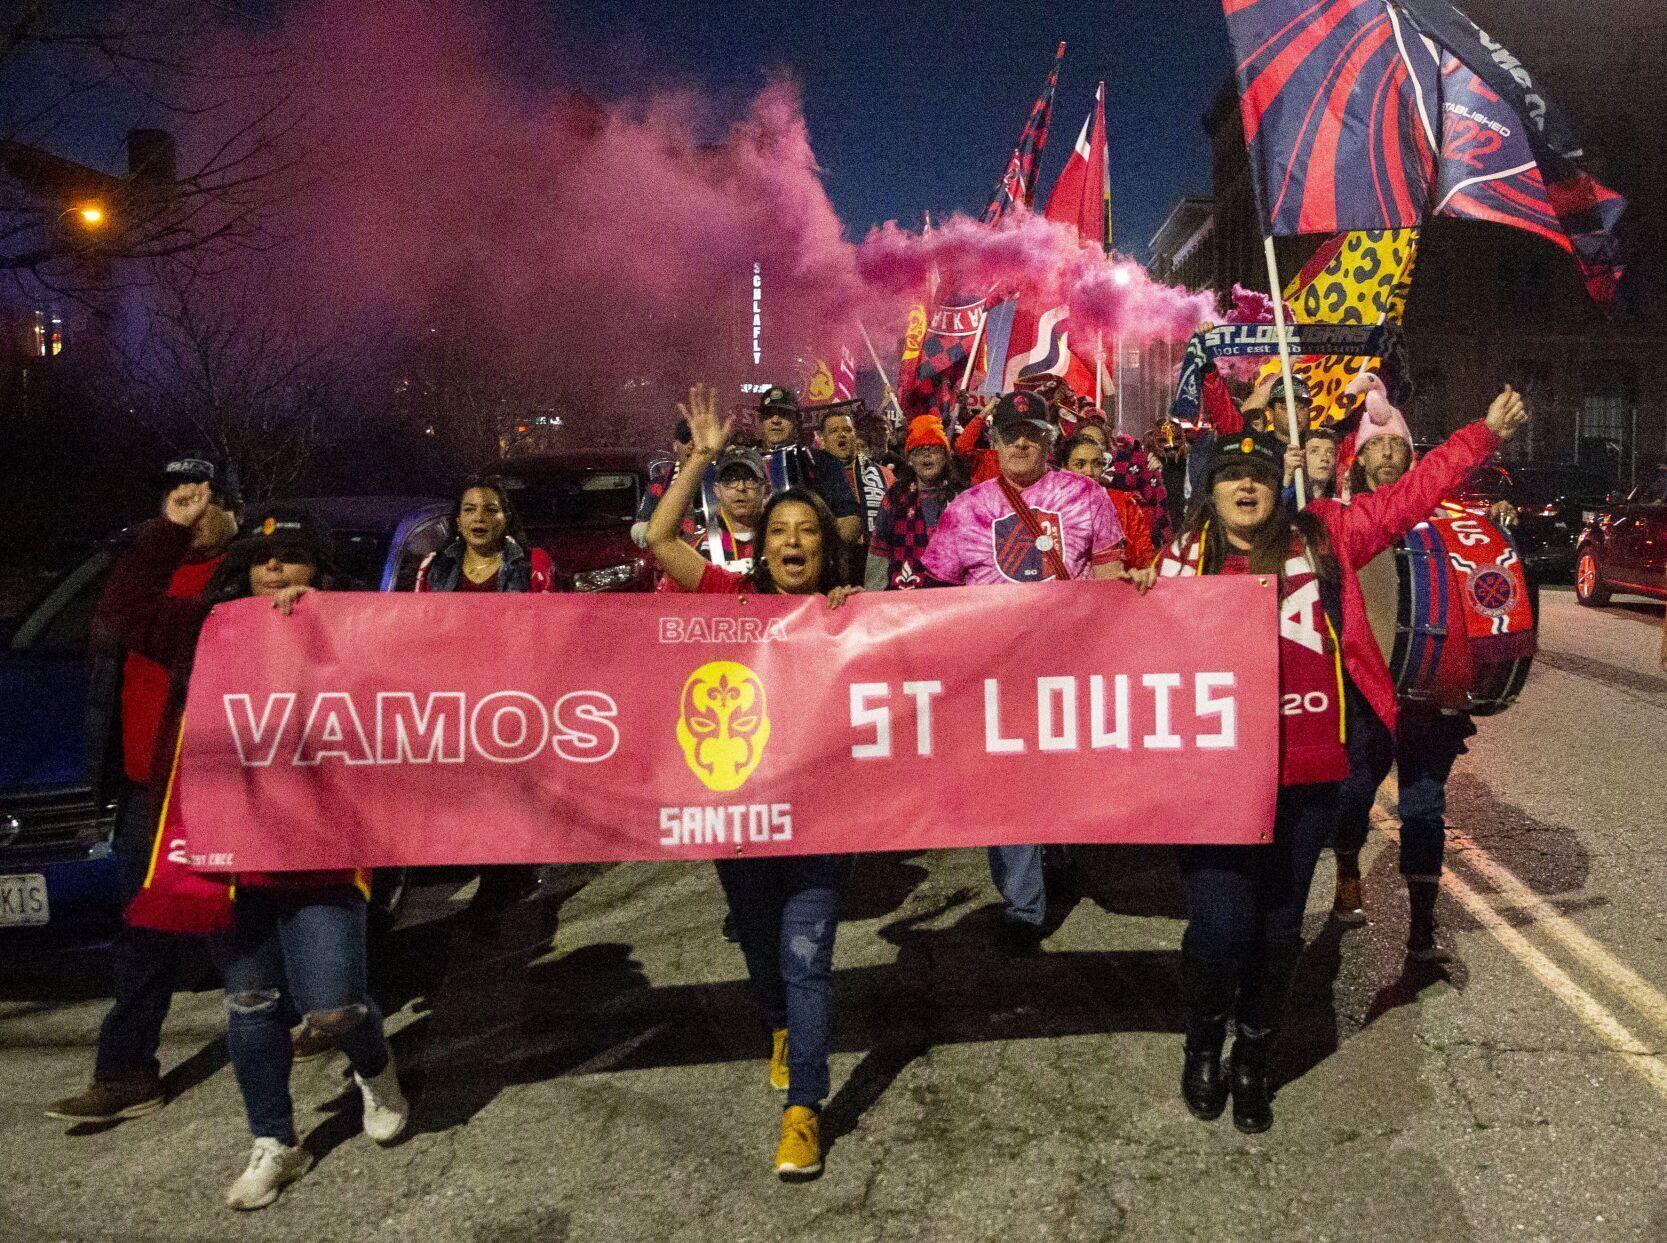 How St. Louis City SC is scoring a fan base months before its first MLS  season kicks off